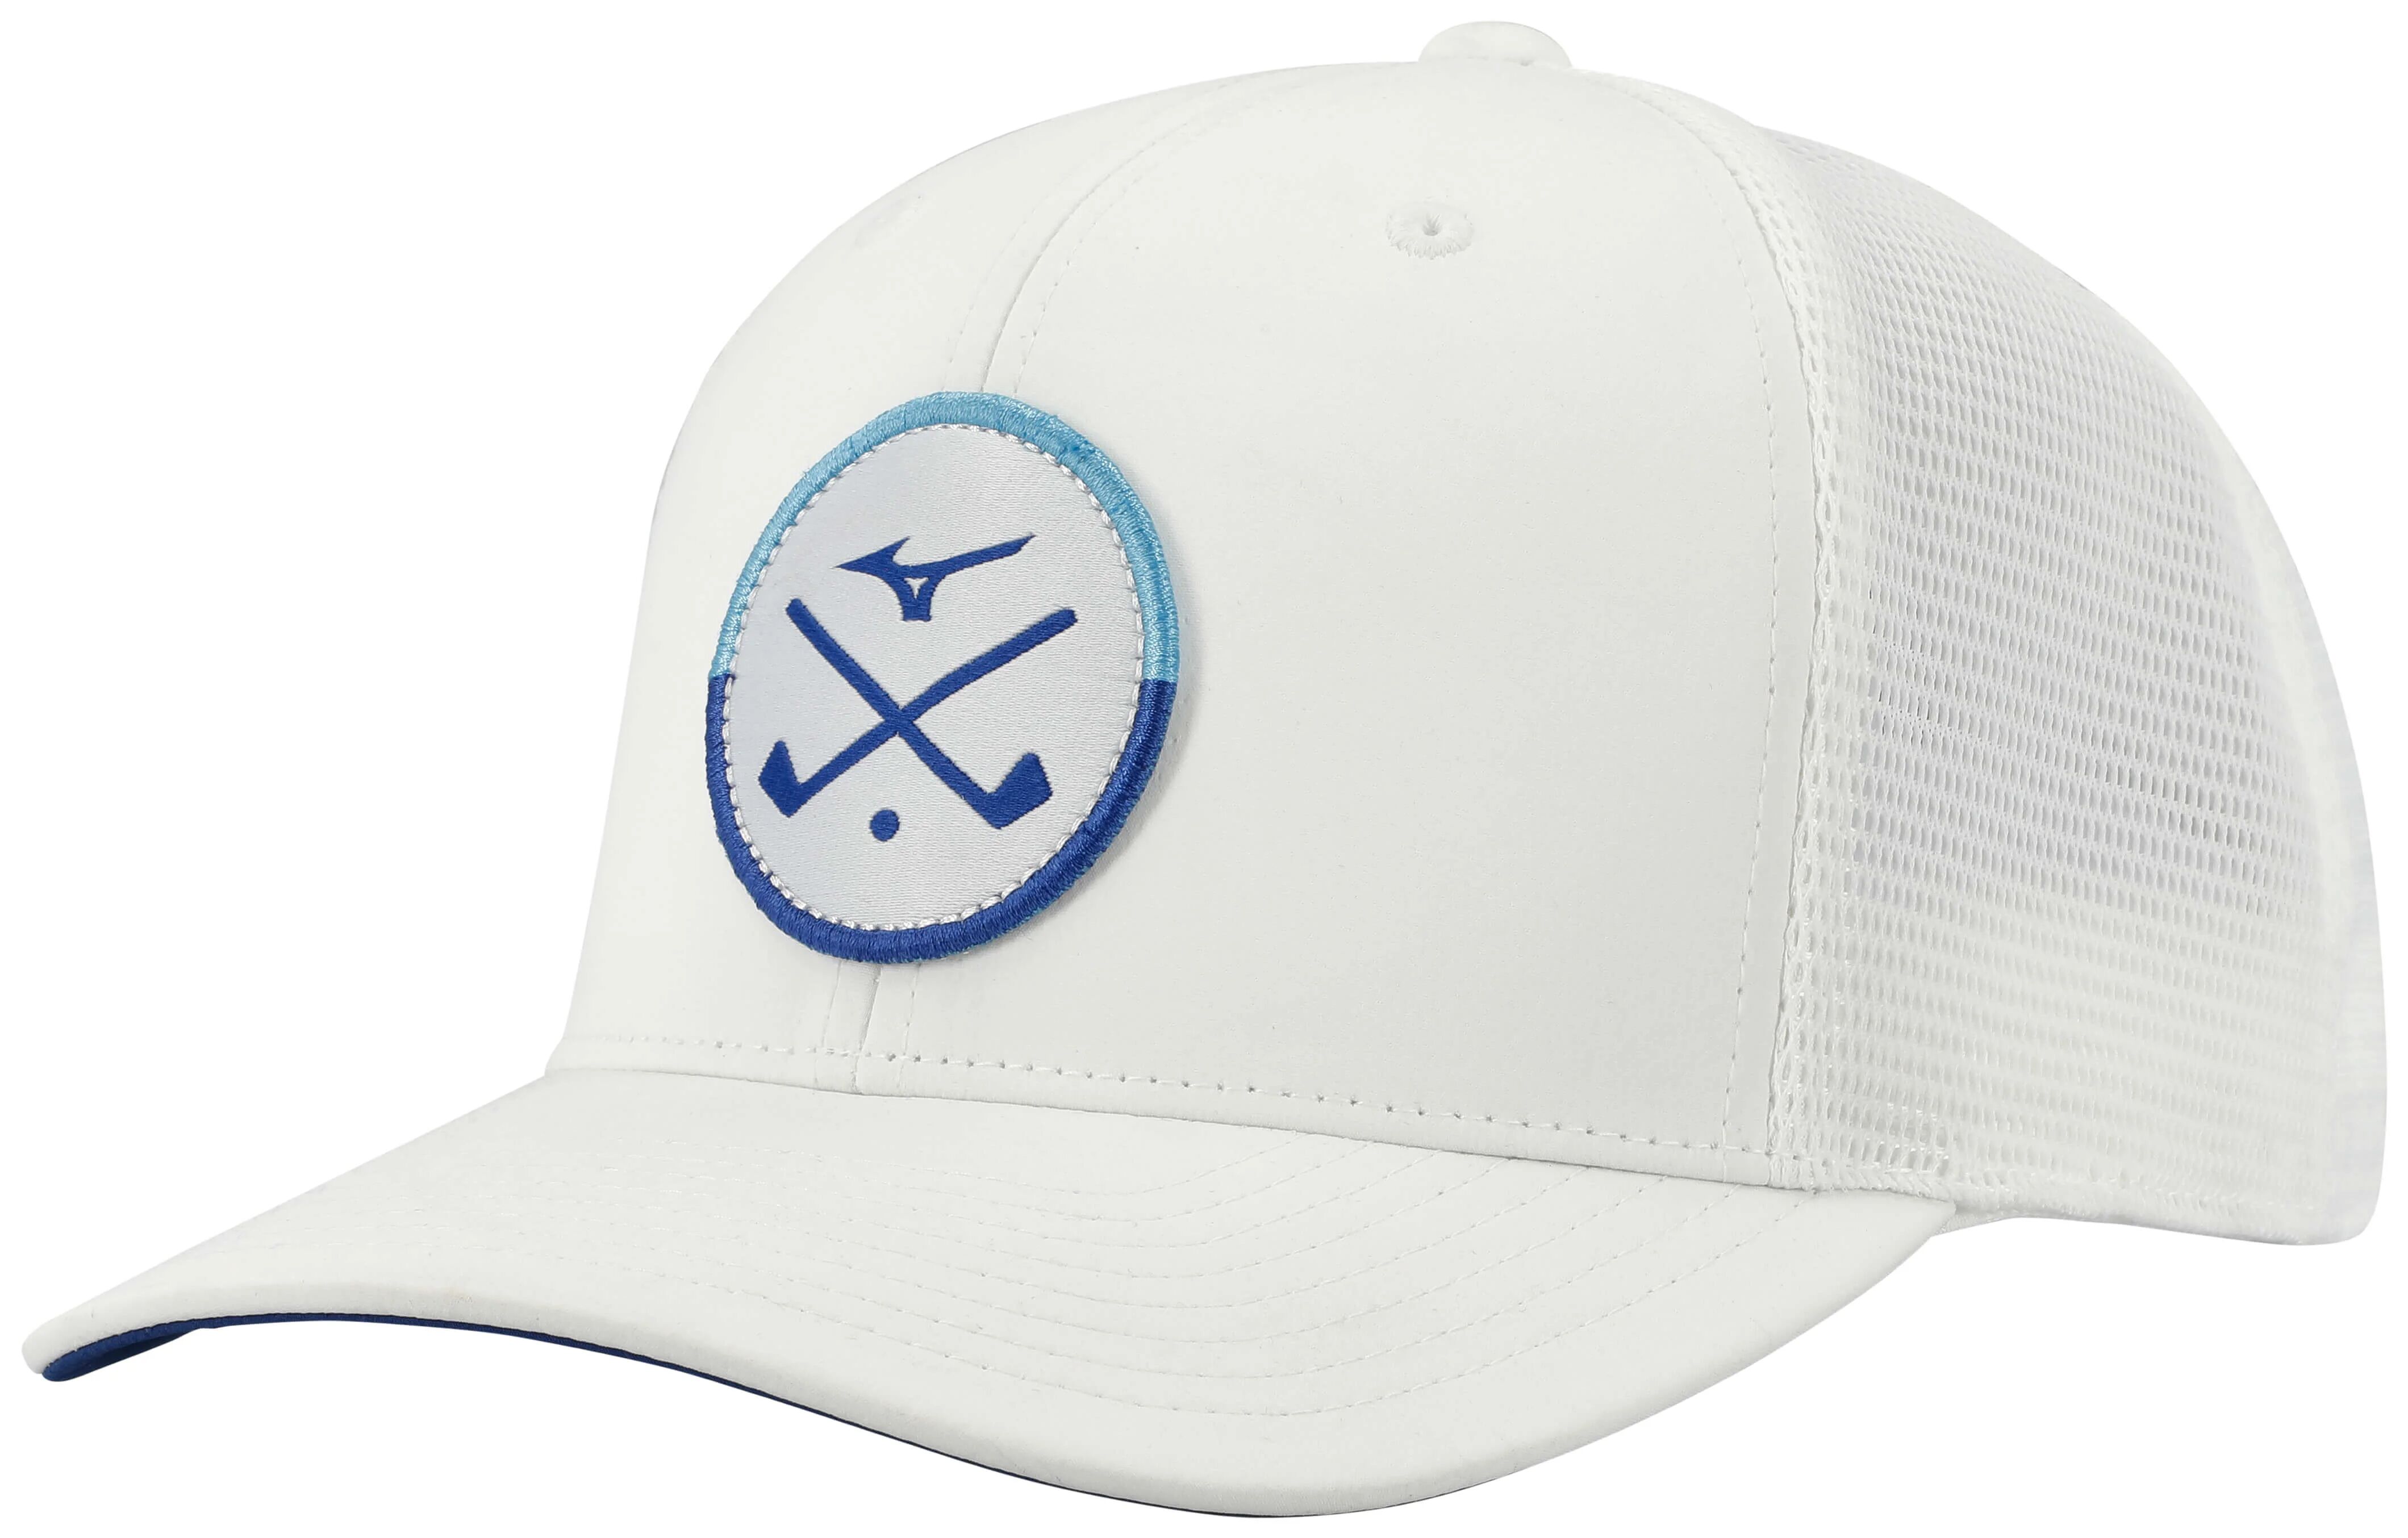 Mizuno Crossed Clubs Mesh Snapback Men's Golf Hat - White